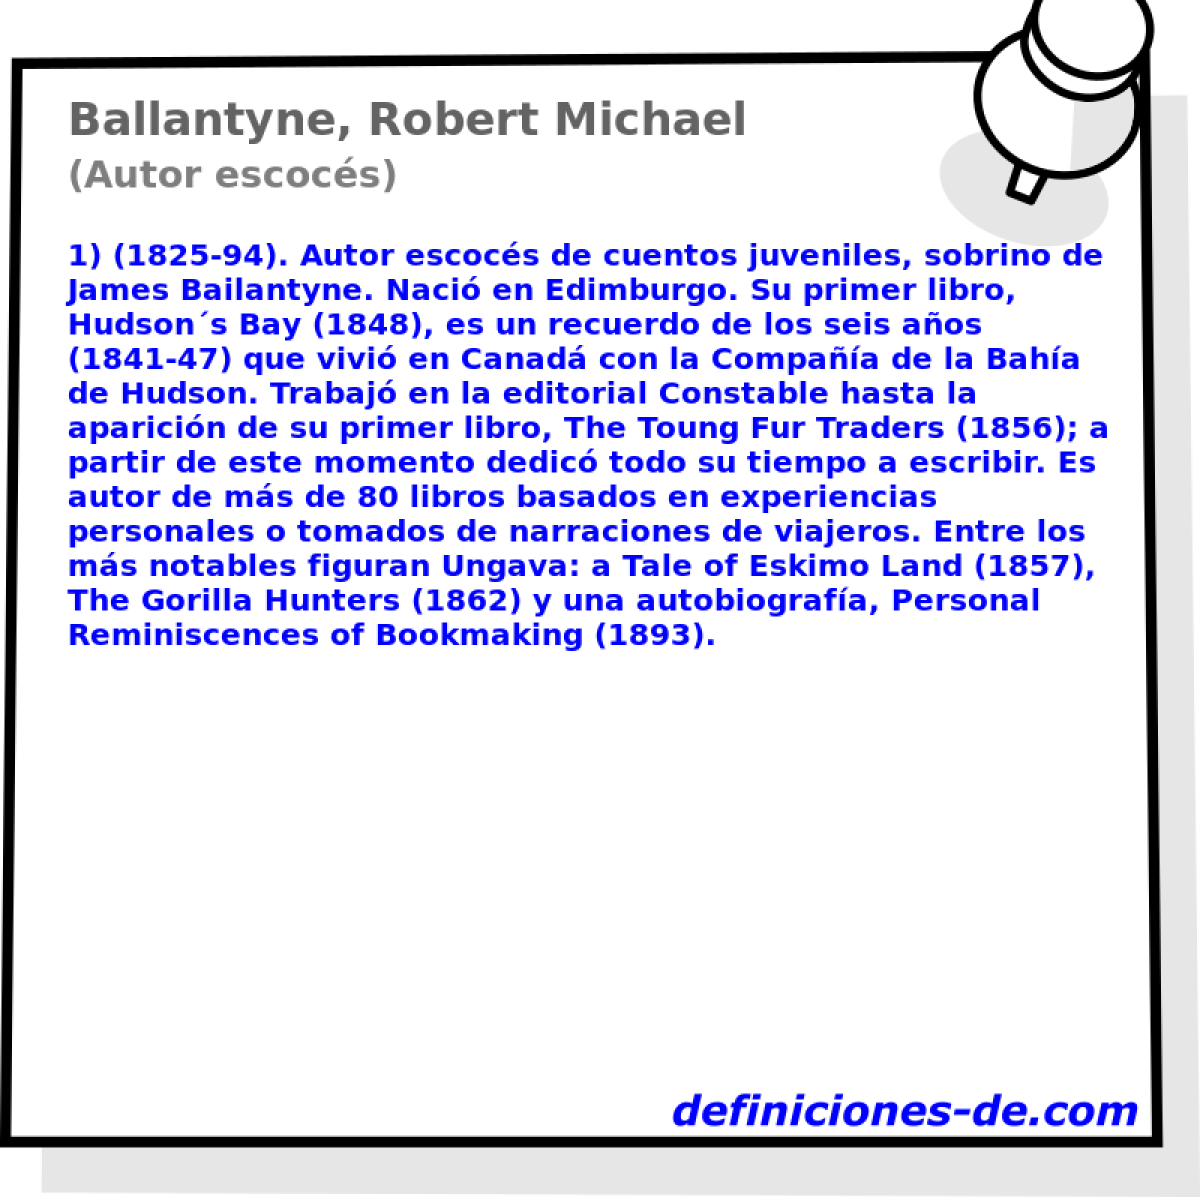 Ballantyne, Robert Michael (Autor escocs)